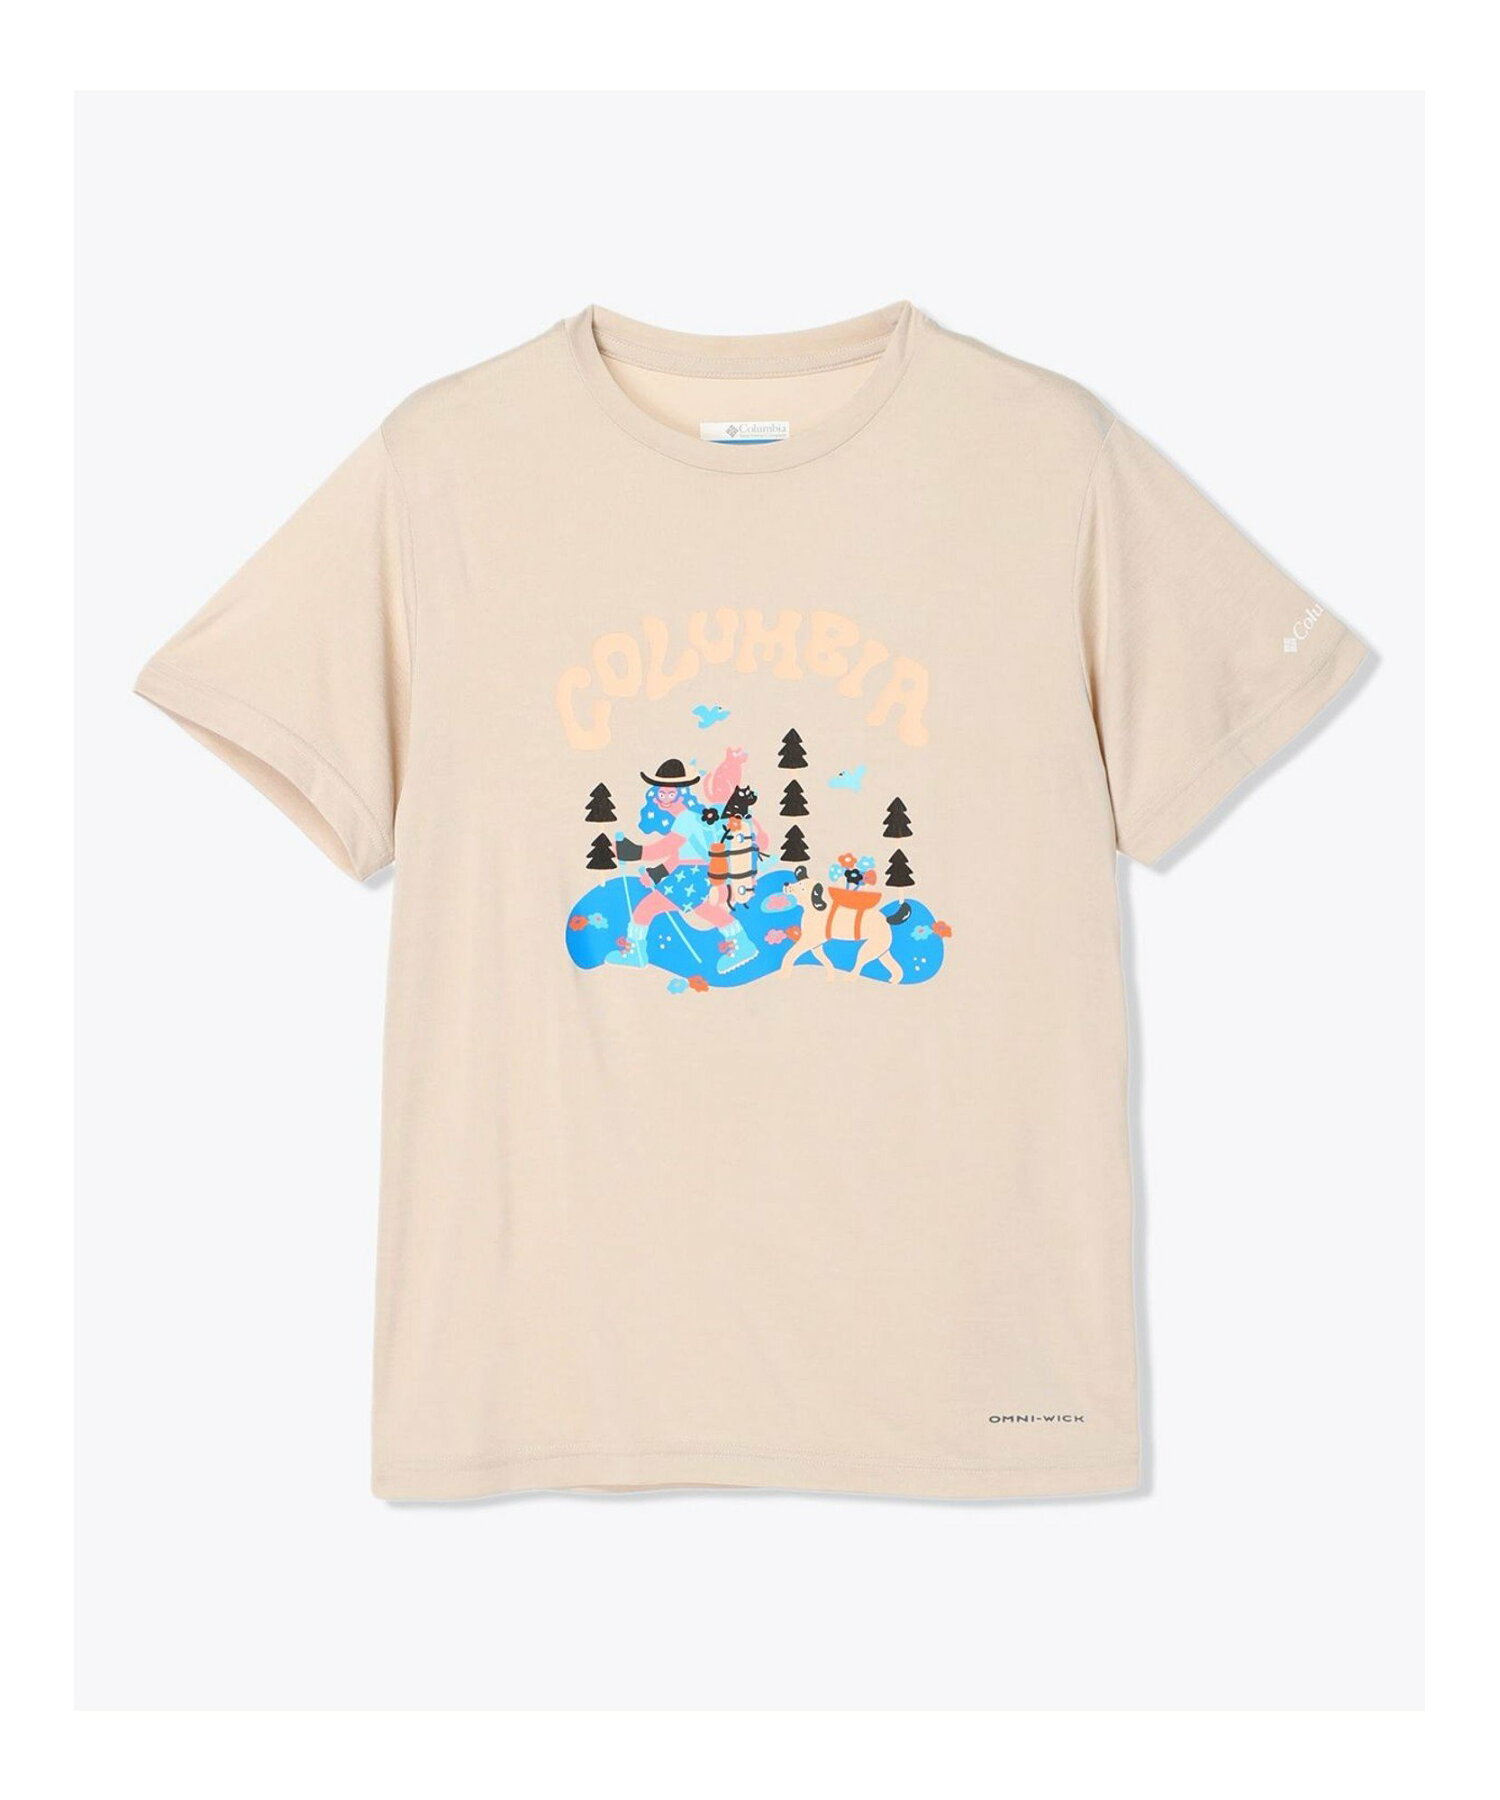 【KIDS】ユースエンジョイマウンテンライフサマーショートスリーブTシャツ